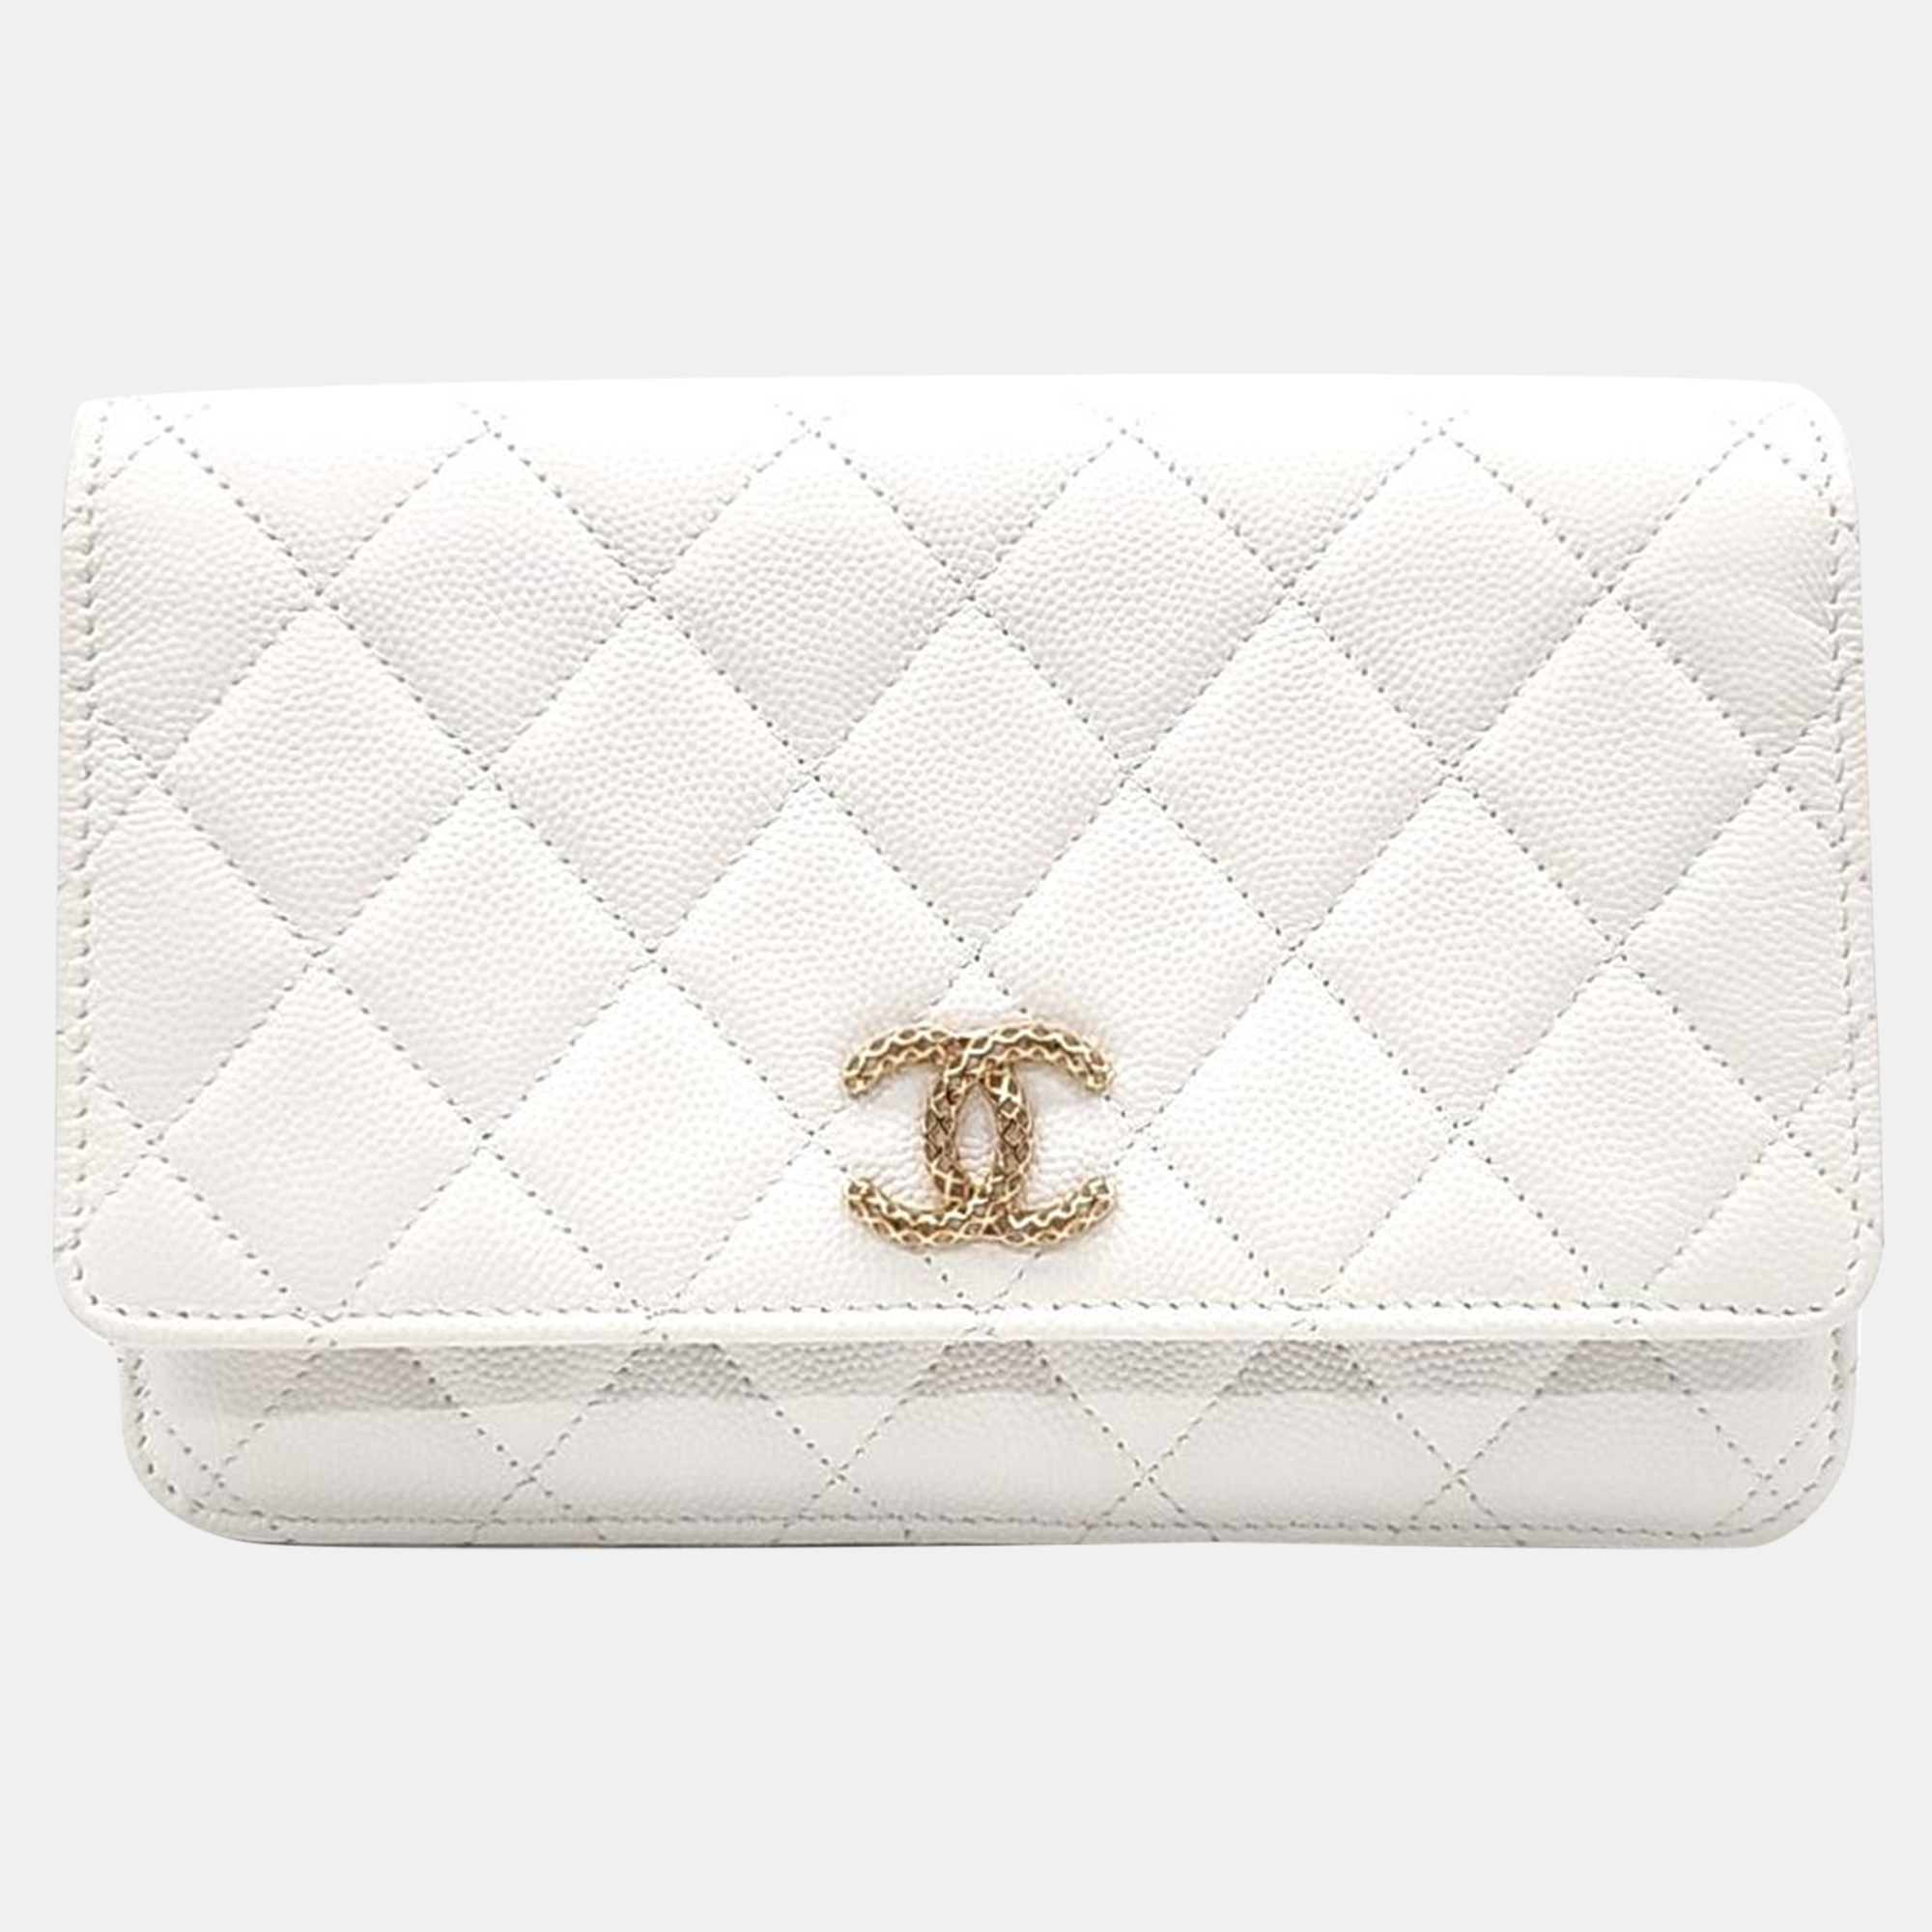 Chanel white lambskin classic mini crossbody bag